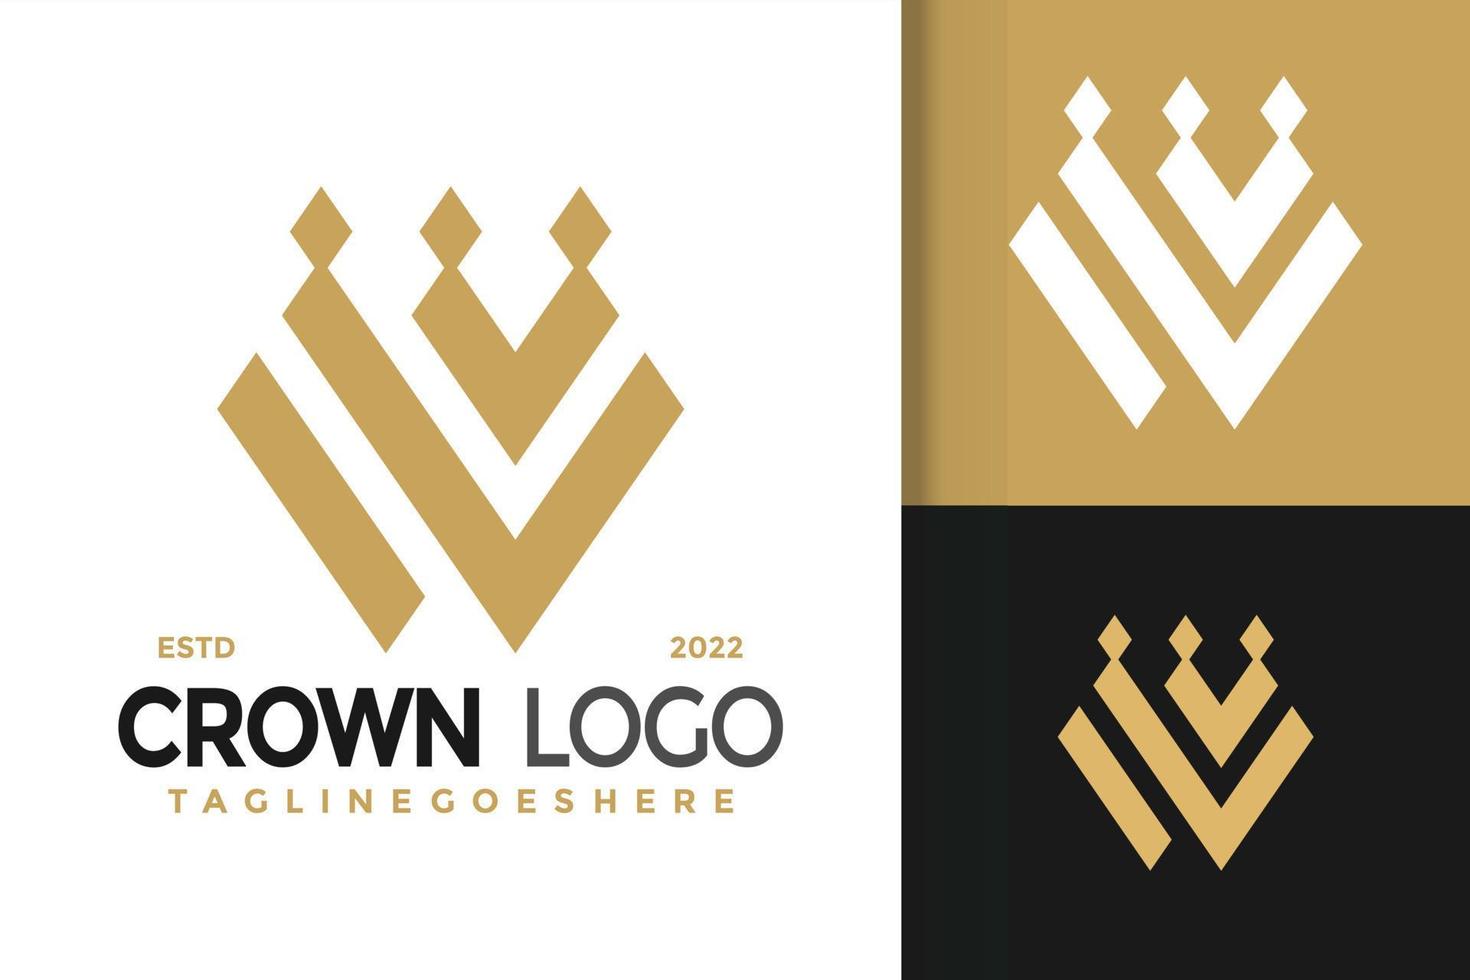 W Letter Crown Logo Design, brand identity logos vector, modern logo, Logo Designs Vector Illustration Template